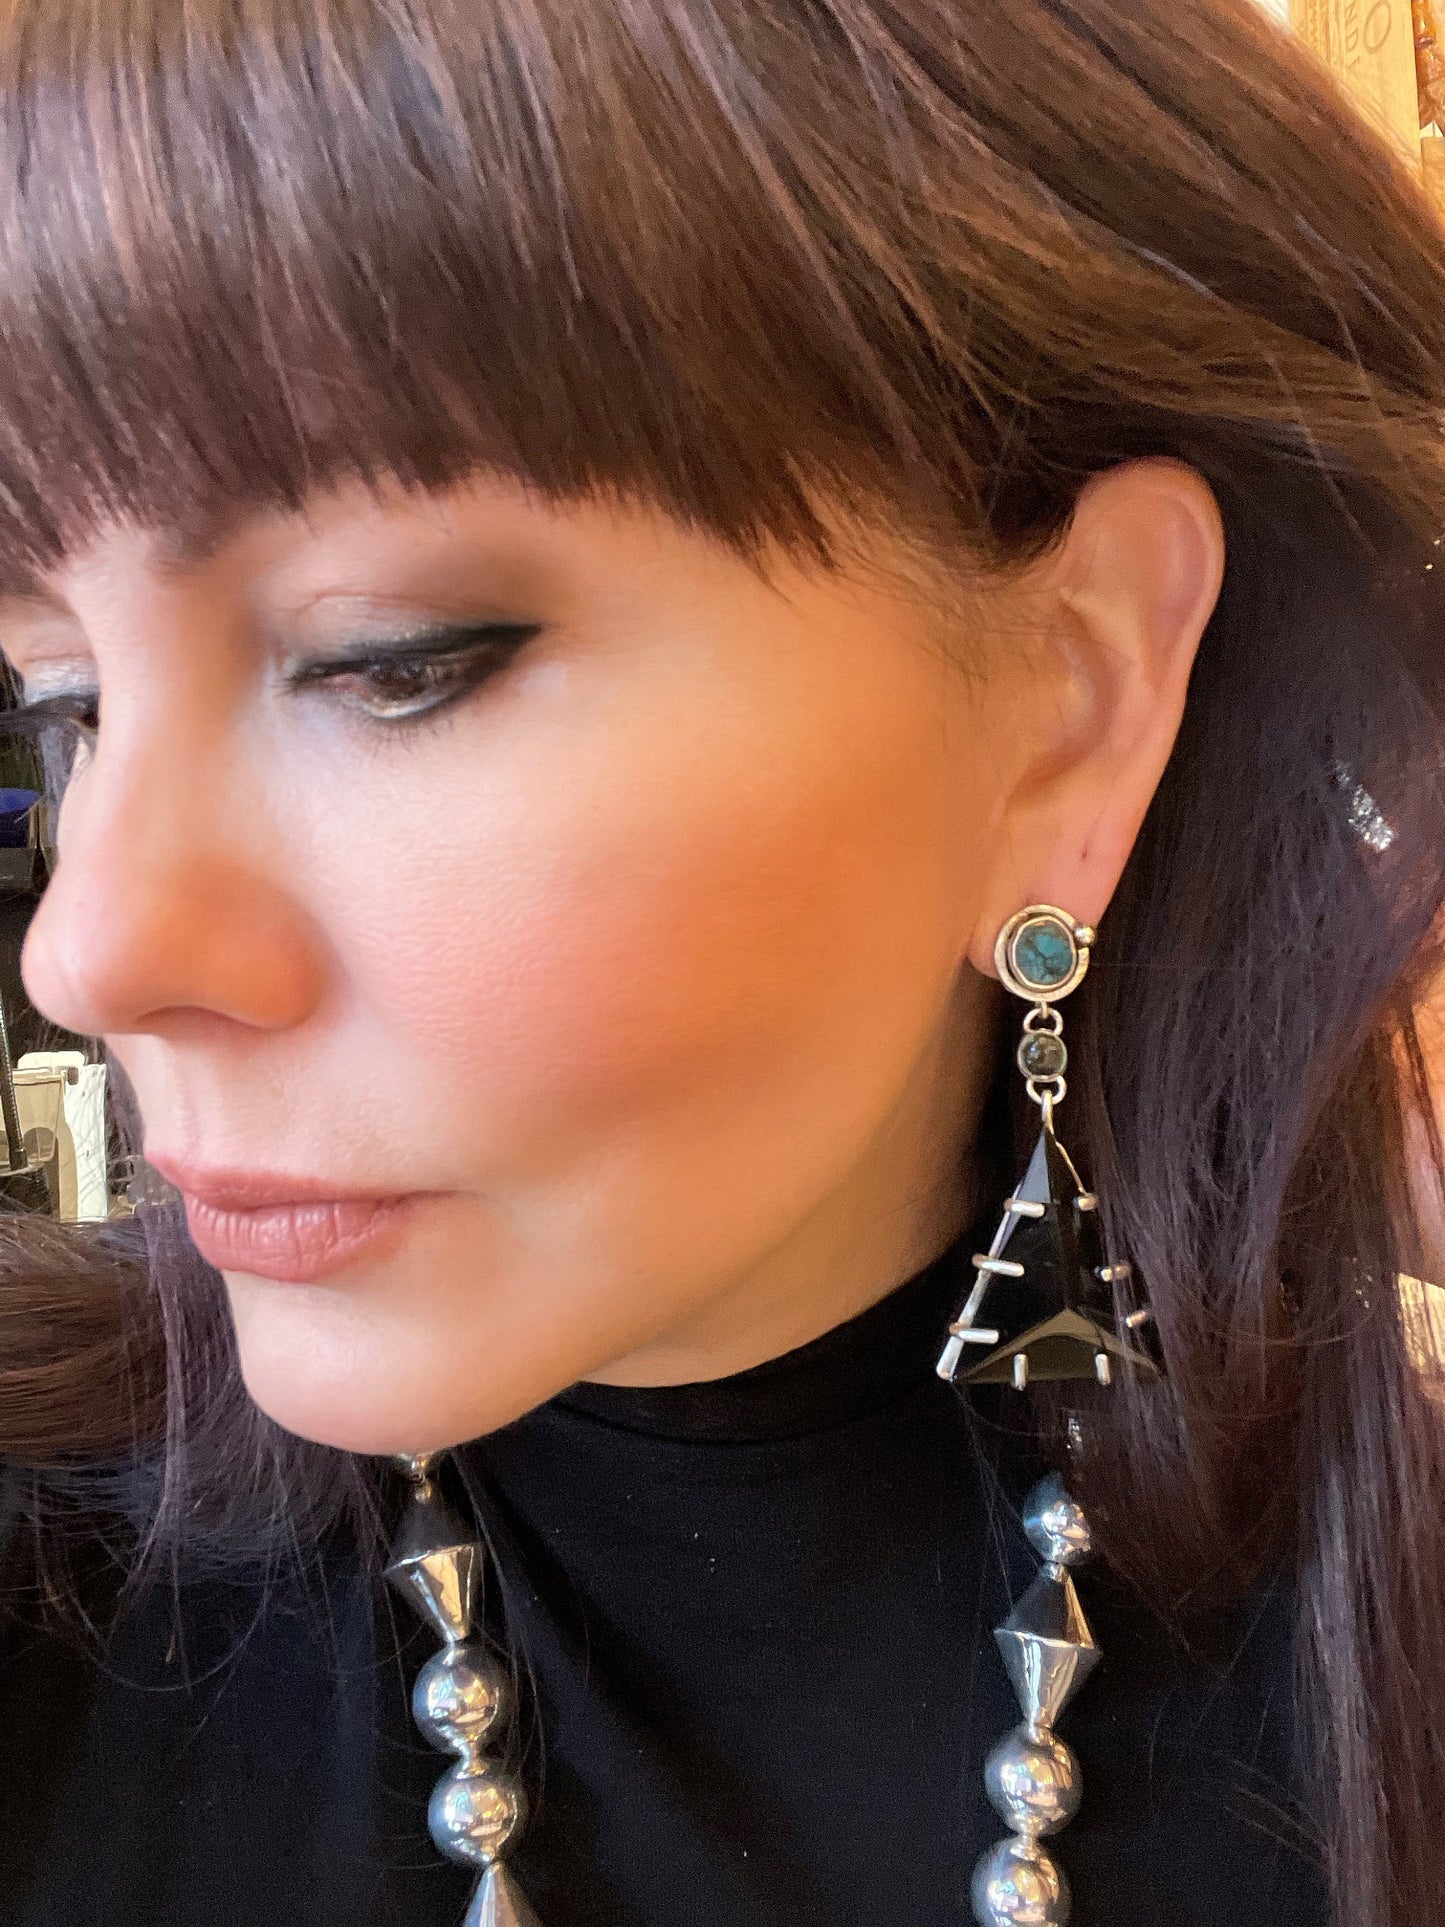 Sterling Silver modernist black jade turquoise earrings